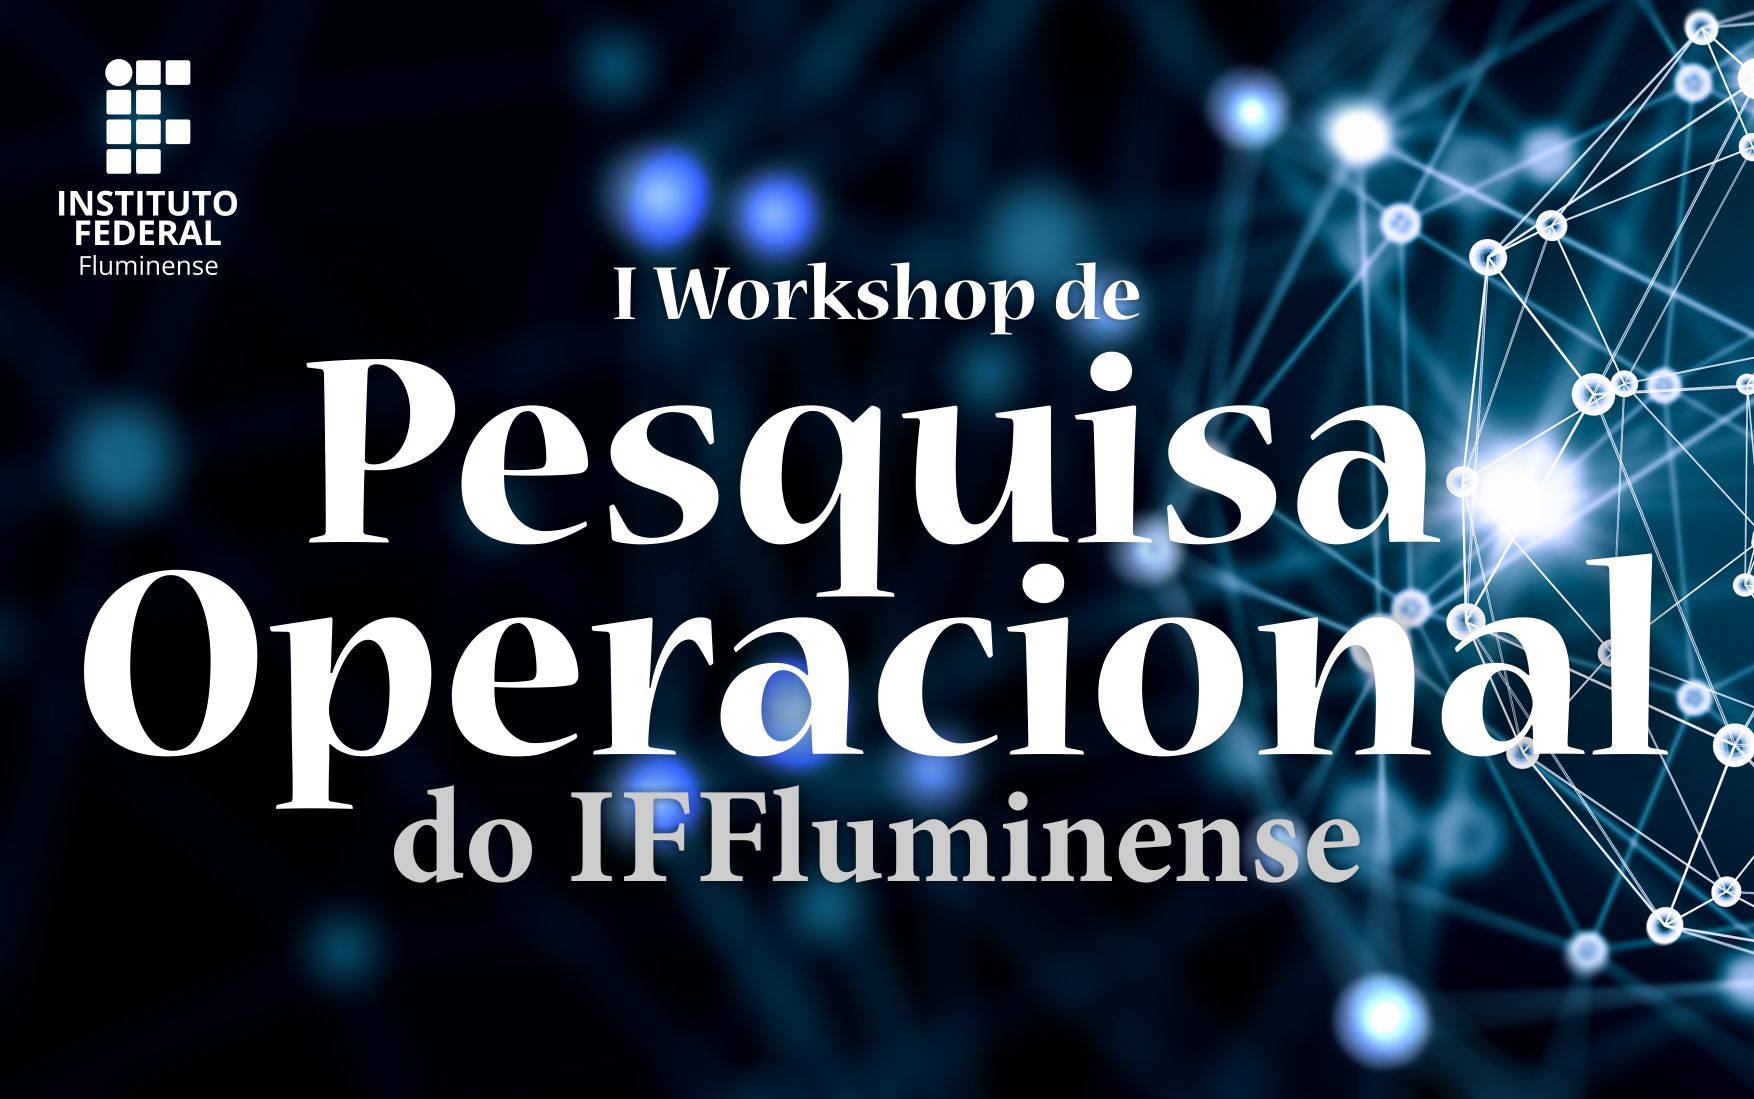 I Workshop de Pesquisa Operacional do IFFluminense